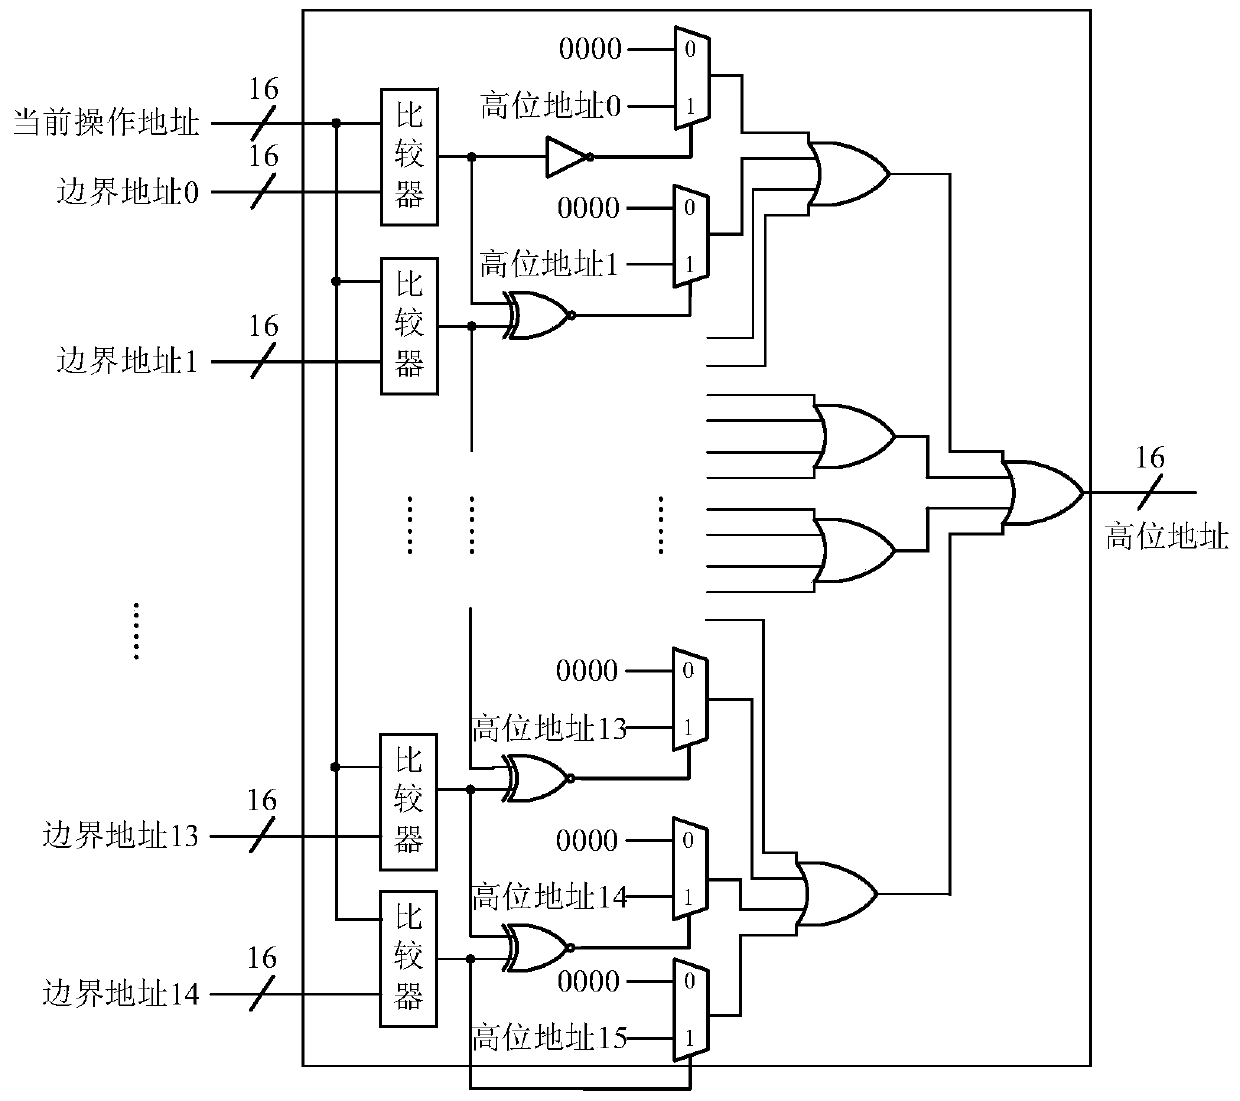 An emif interface and ahb/apb timing bridge circuit and its control method